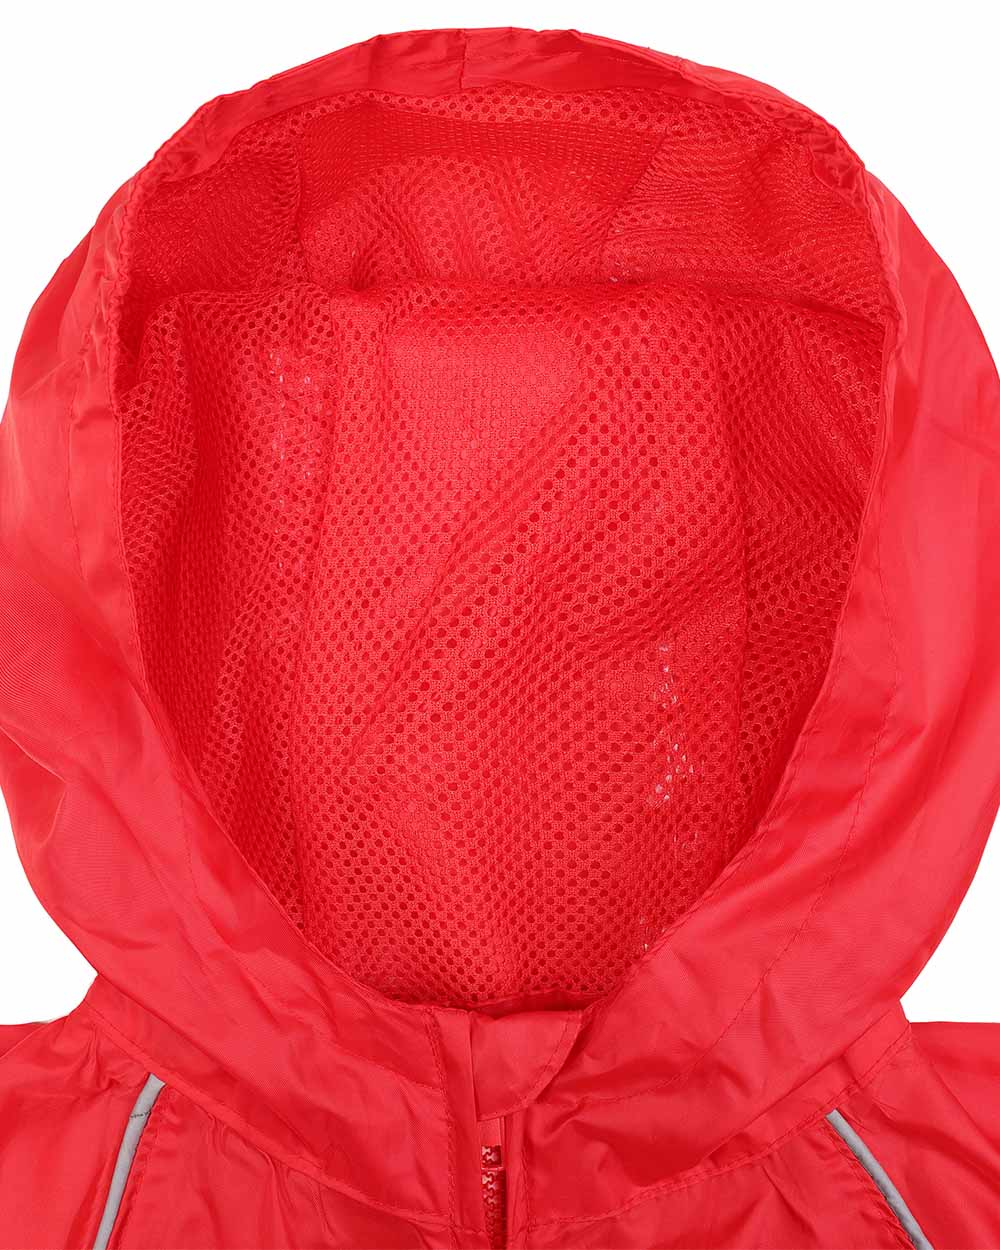 Mesh lined hood Fort Childrens Splashaway Rainsuit in Red 